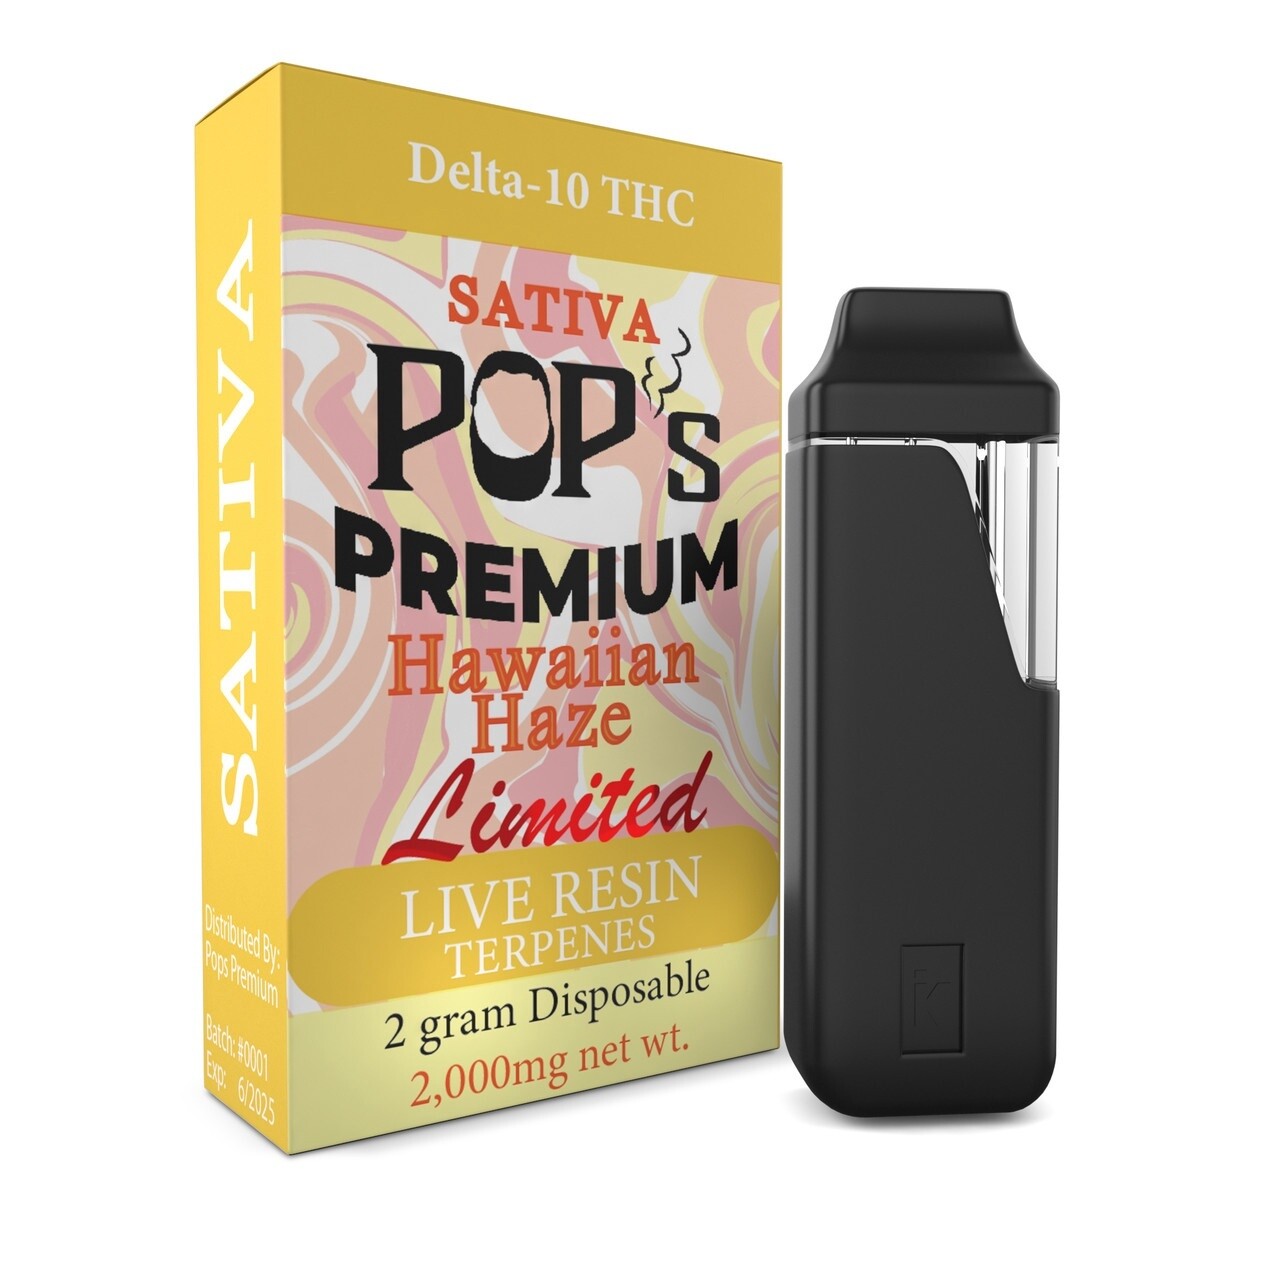 Pop's Premium Hawaiian Haze Limited Live Resin Disposable - 2g